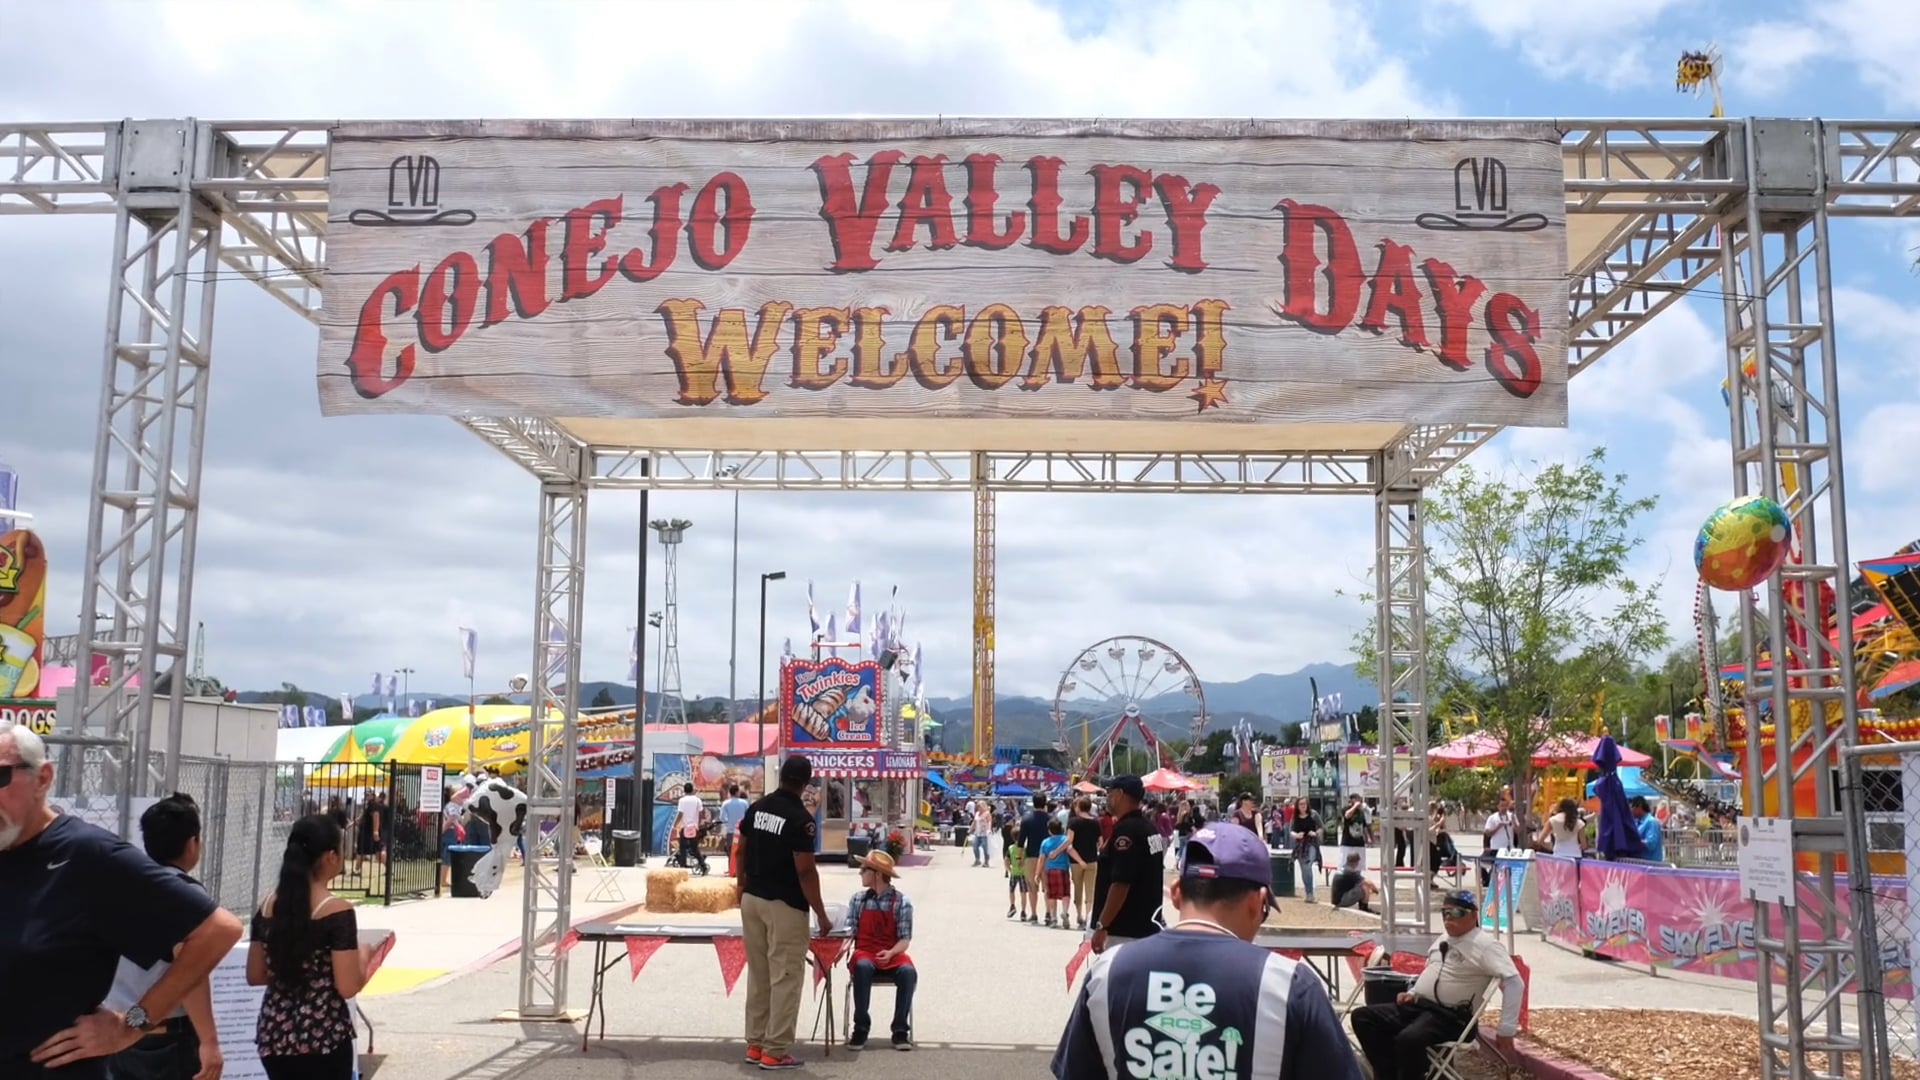 Conejo Valley Days on Vimeo